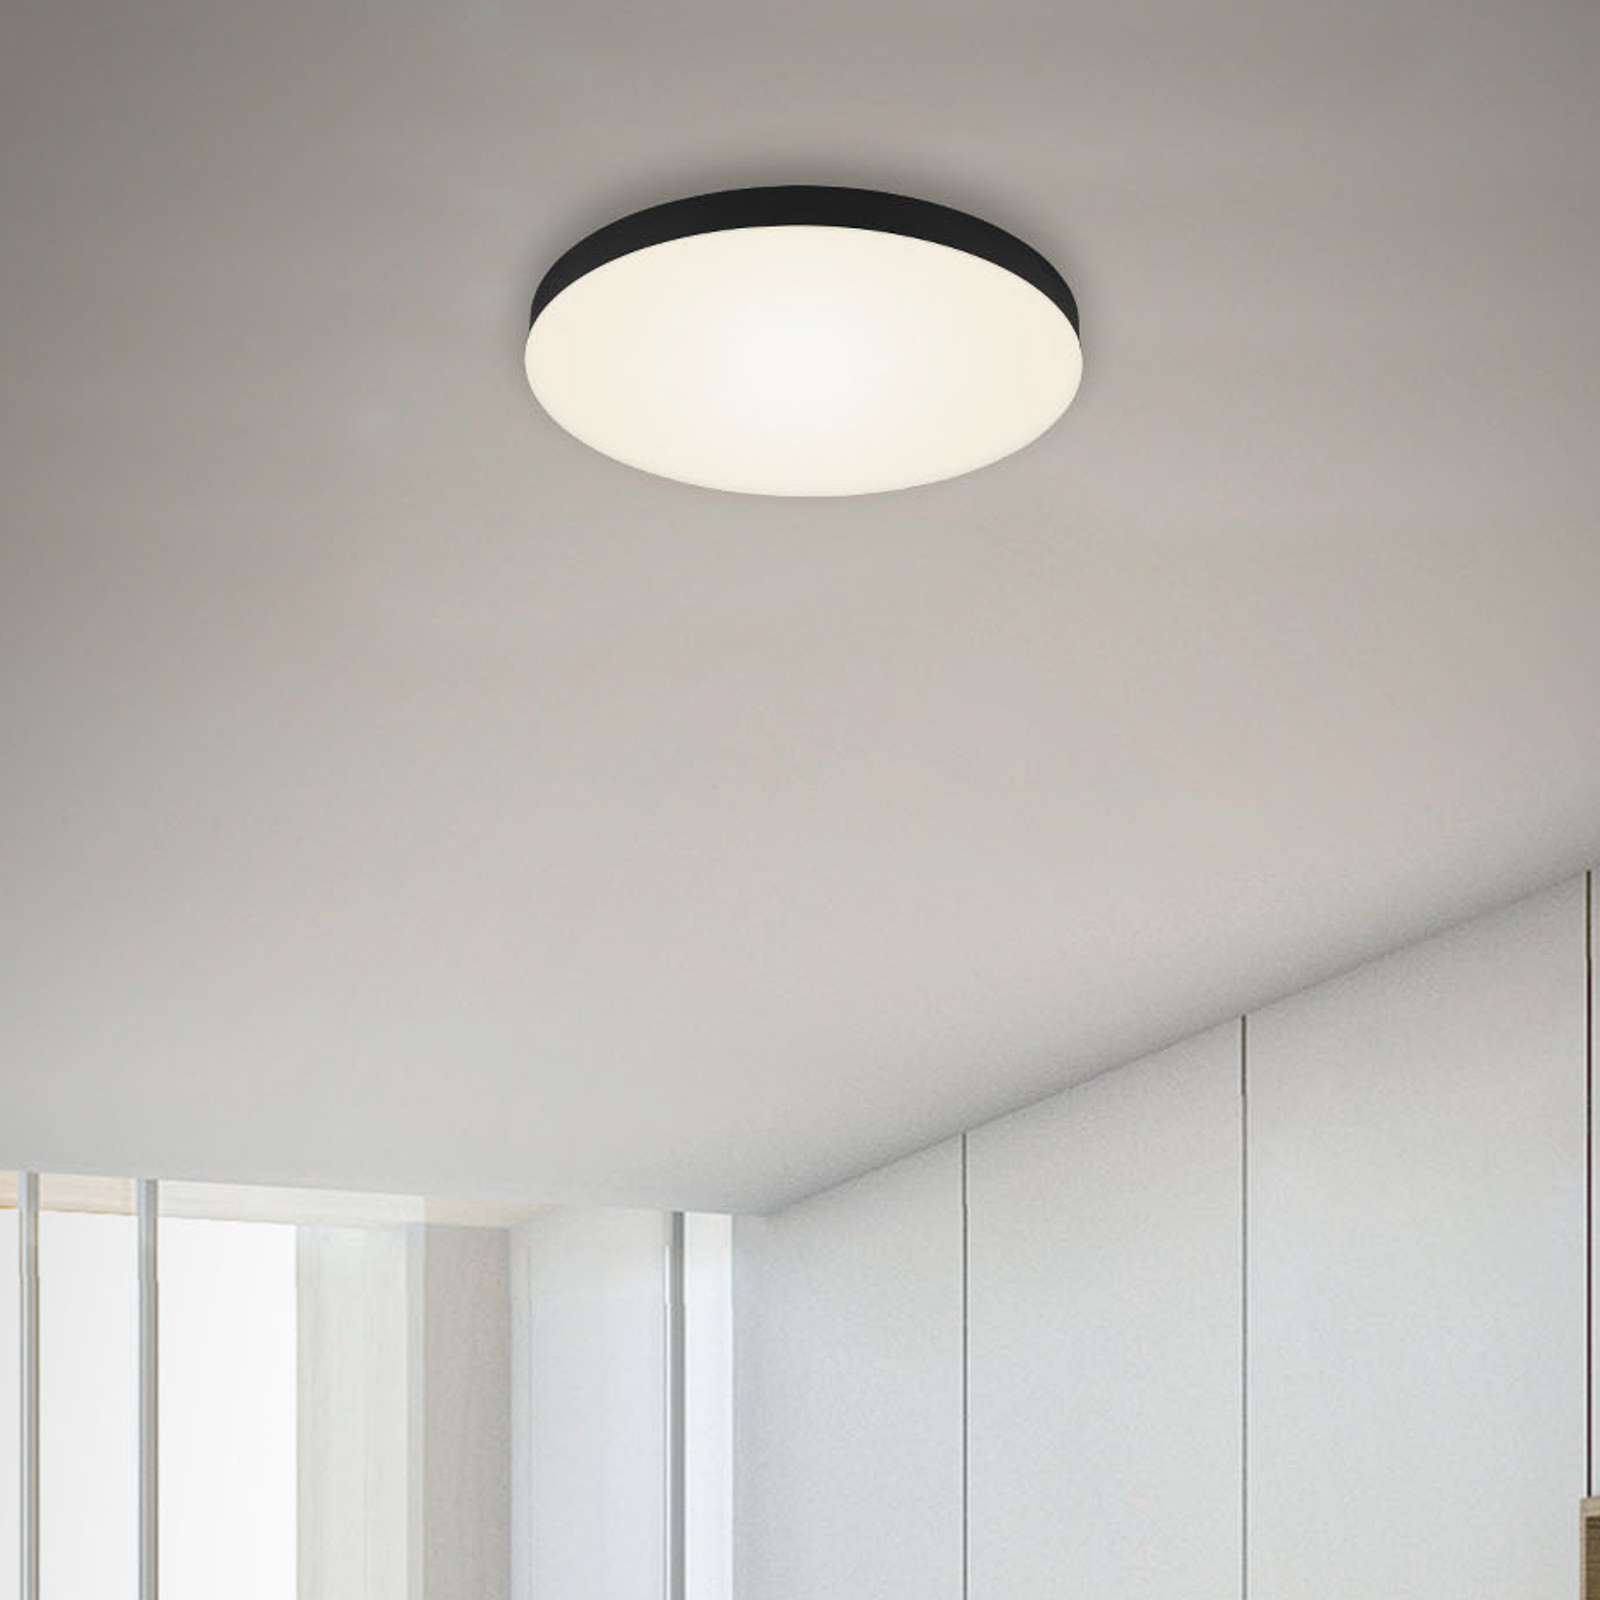 Flame LED ceiling light, Ø 28.7 cm, black